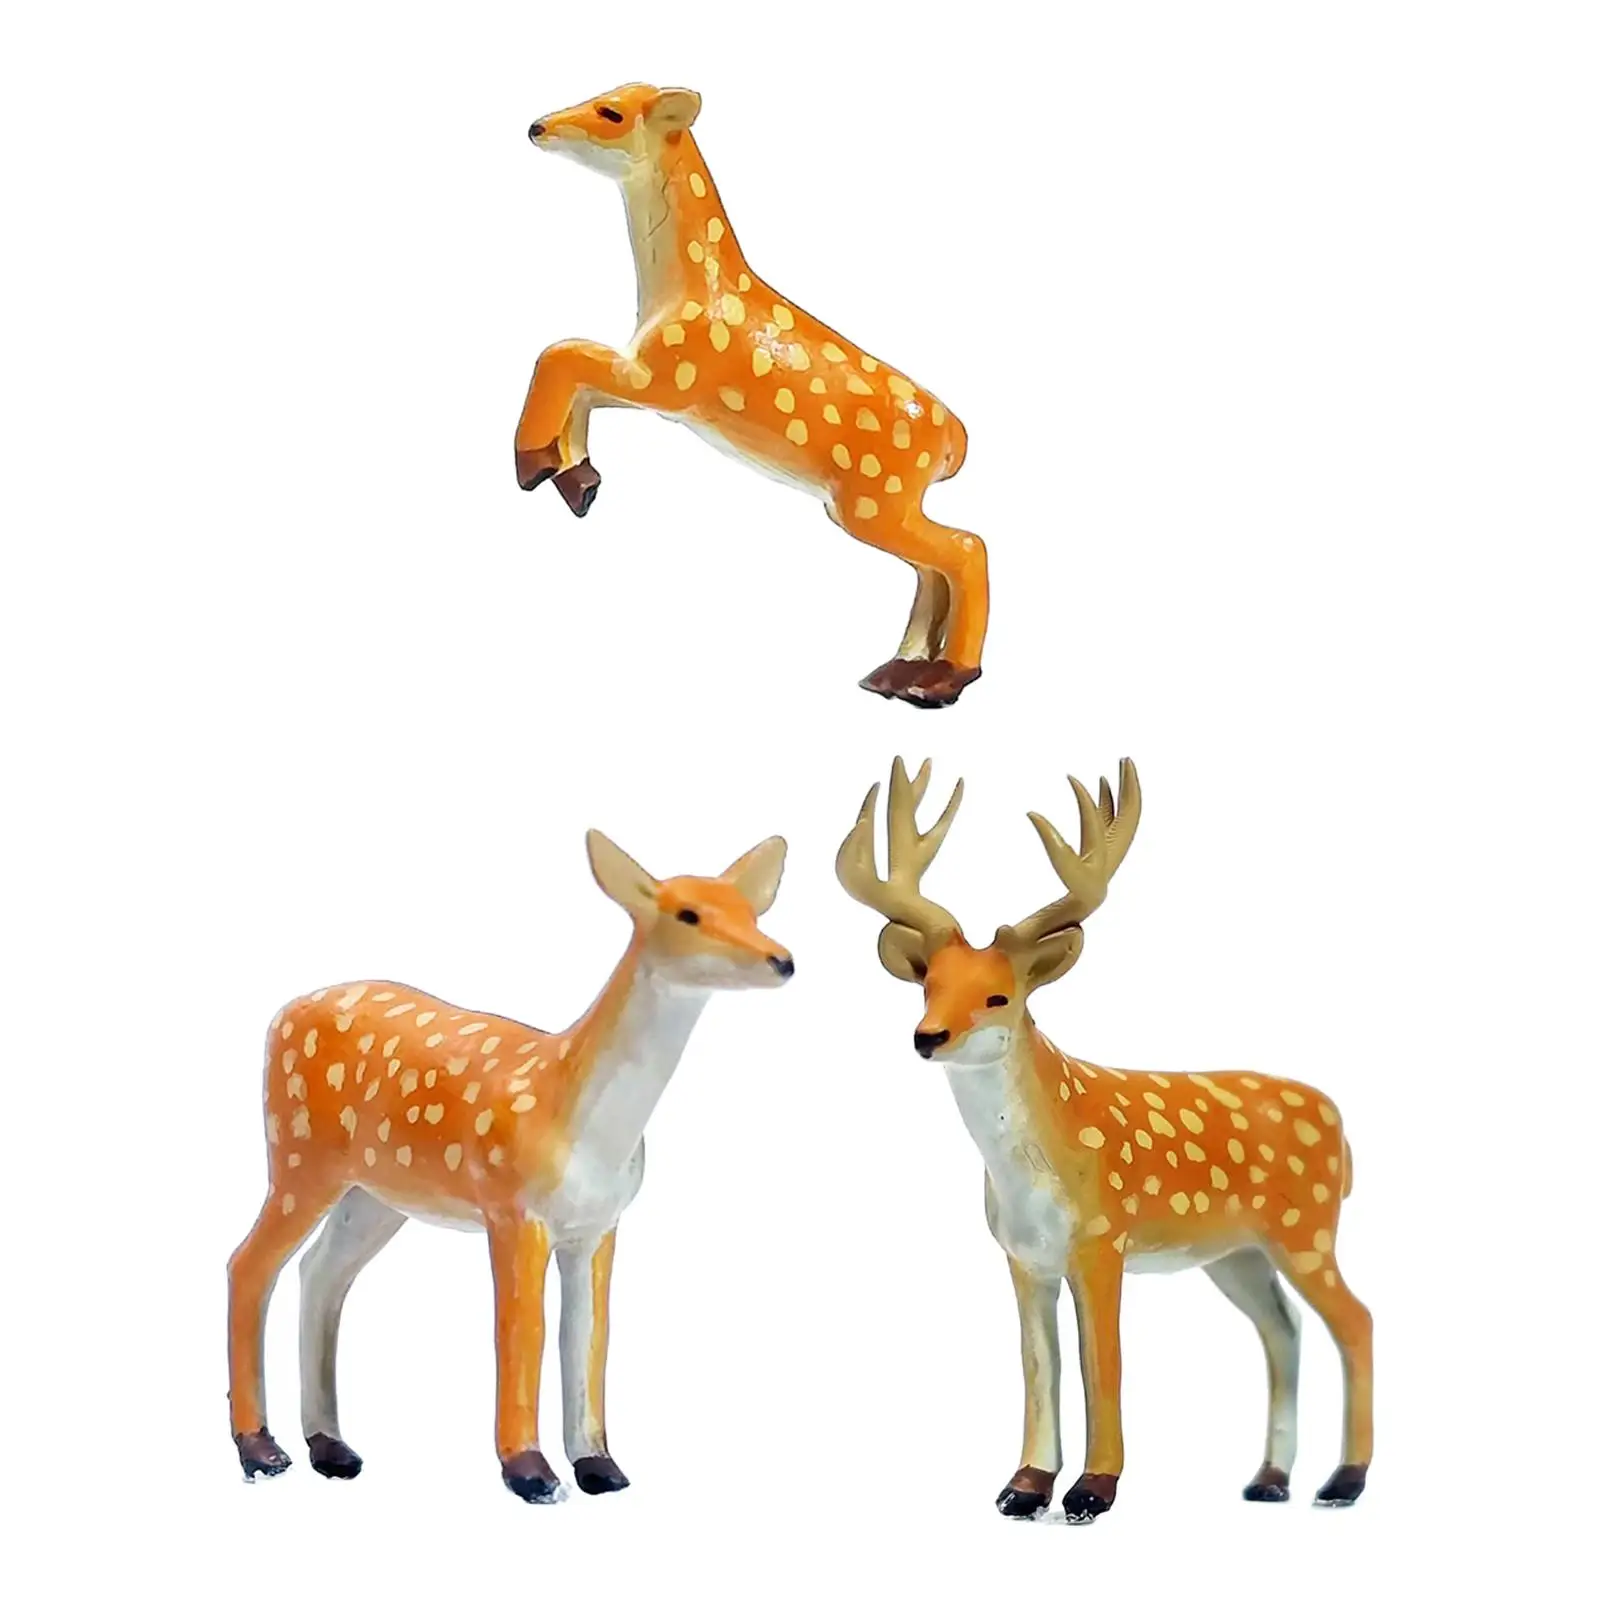 3 Pieces 1/64 Scale Deer Figures Resin Statue for Crafts Desktop Decoration